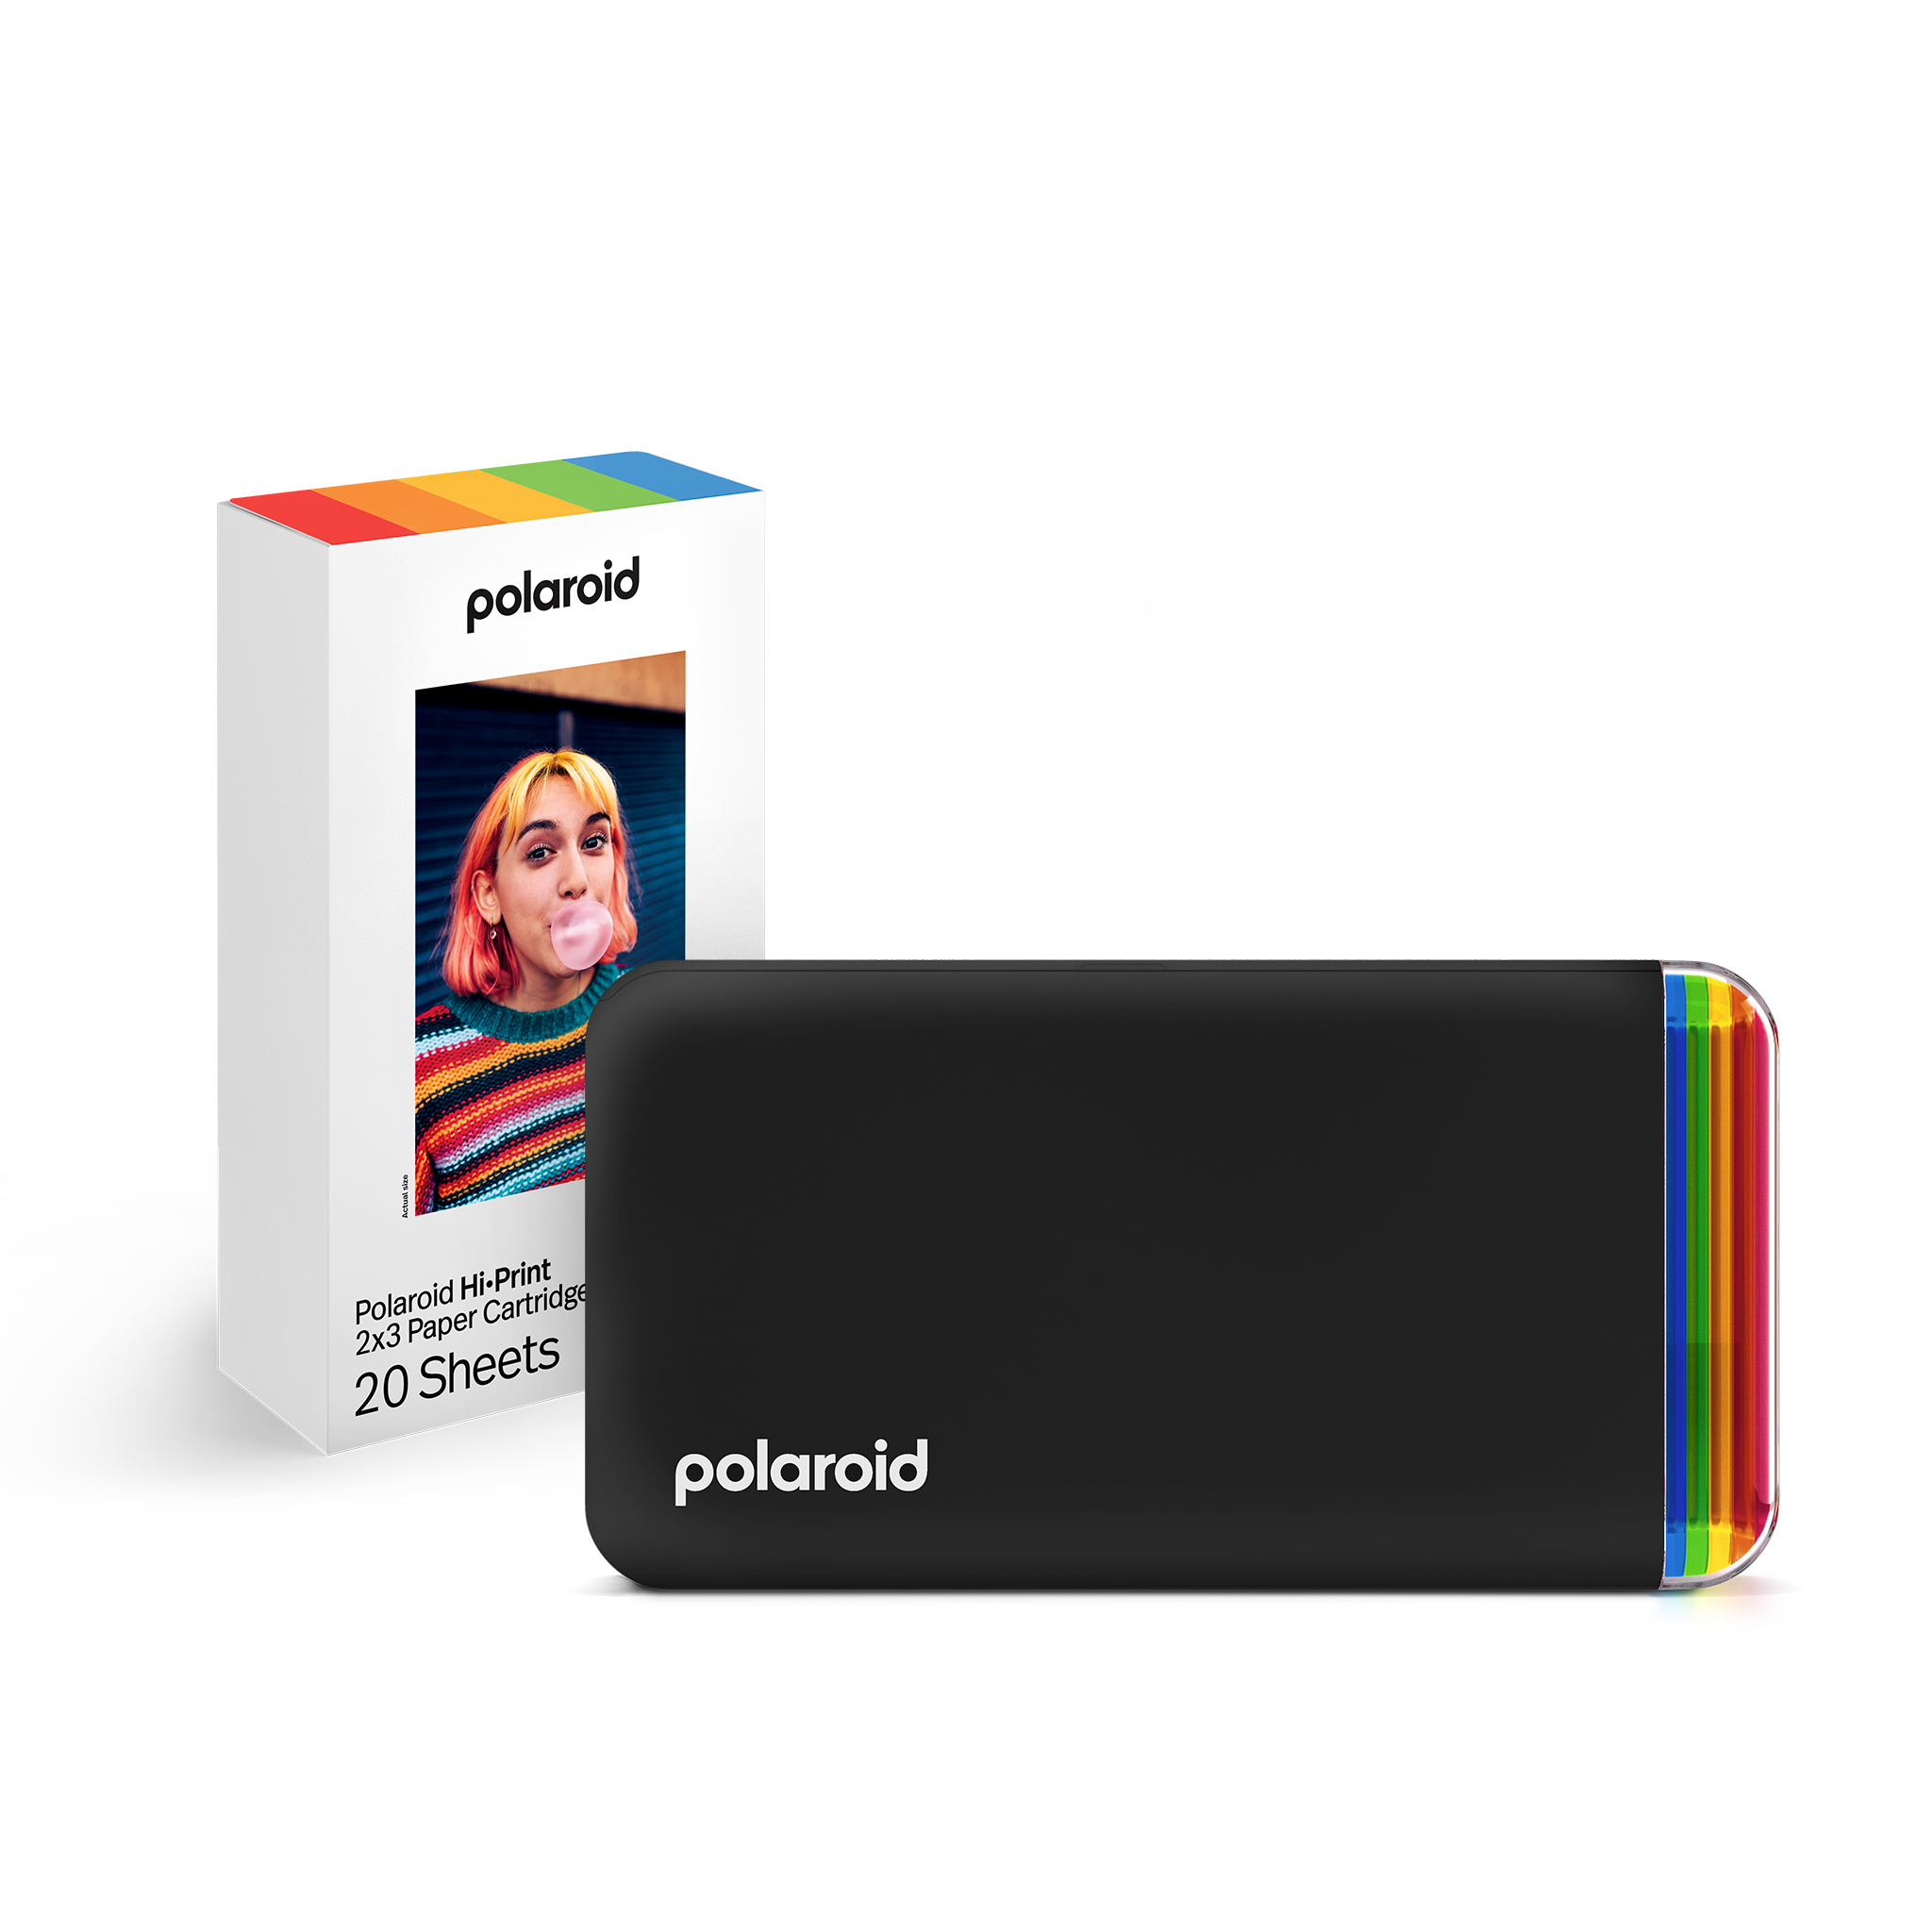 Polaroid Hi-Print, la impresora para recuperar el gusto por la